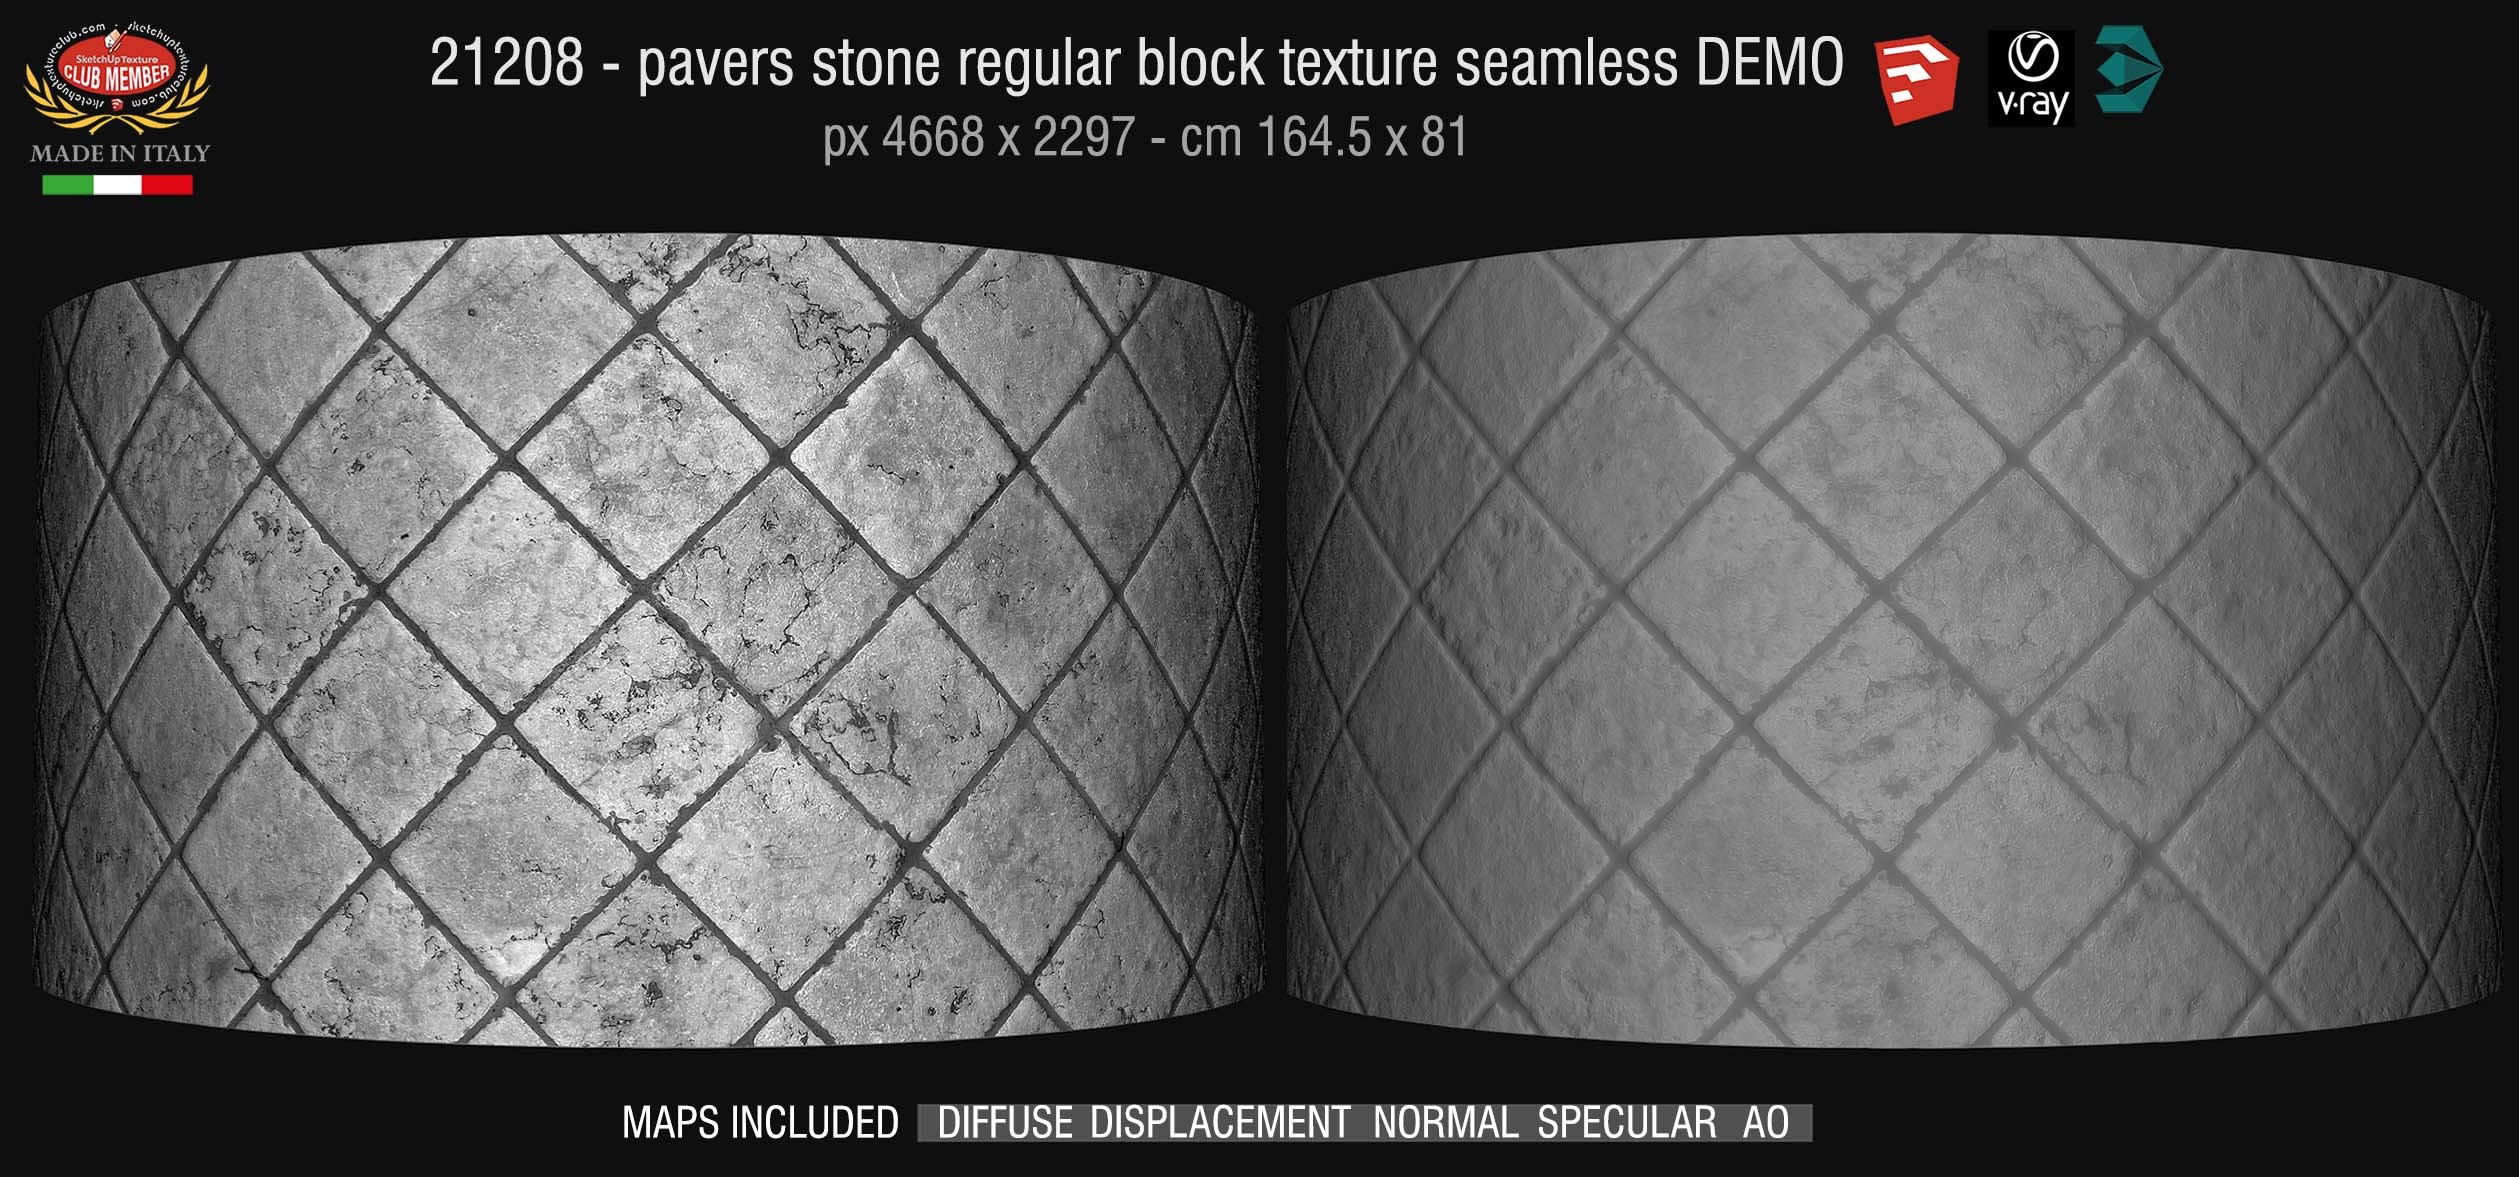 21208 HR Pavers stone regular block texture + maps DEMO